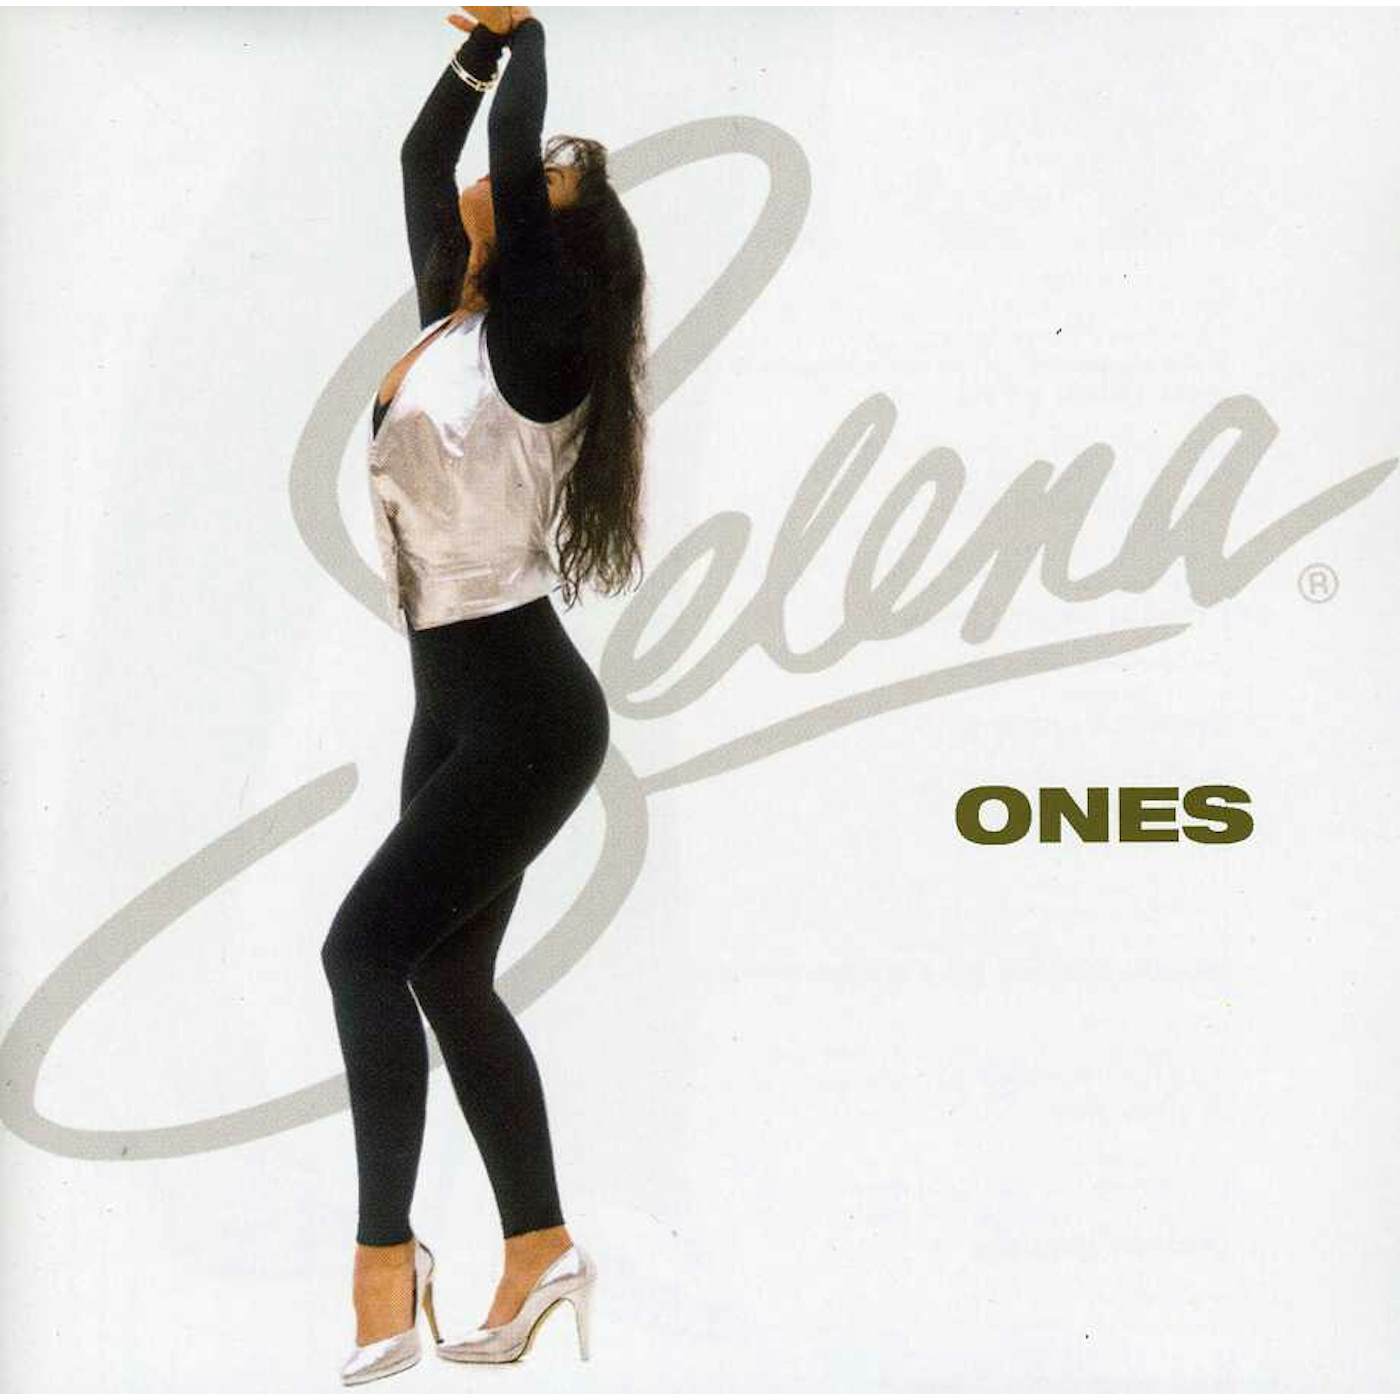 Selena ONES CD